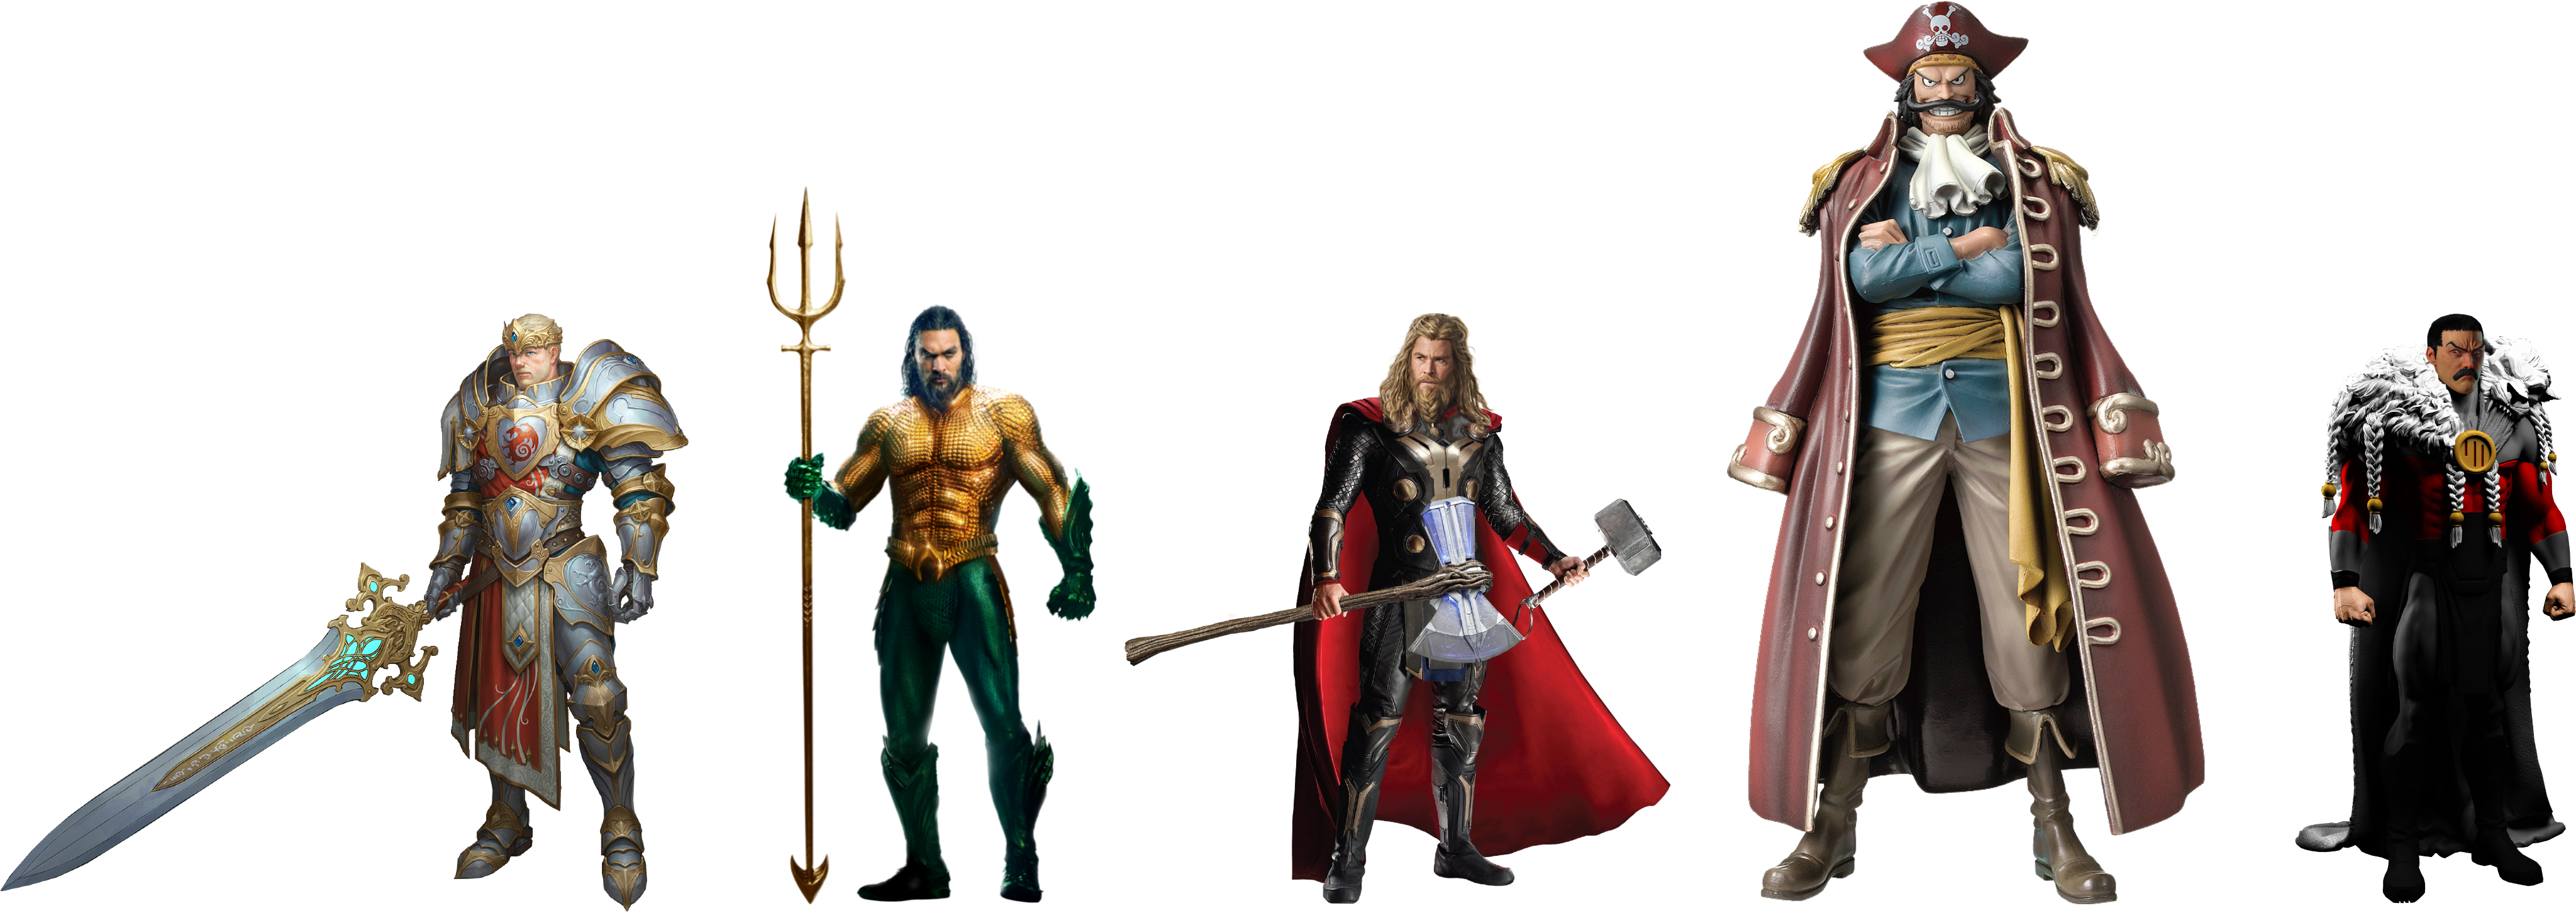 God of War - Thor Family Transparent by DavidBksAndrade on DeviantArt